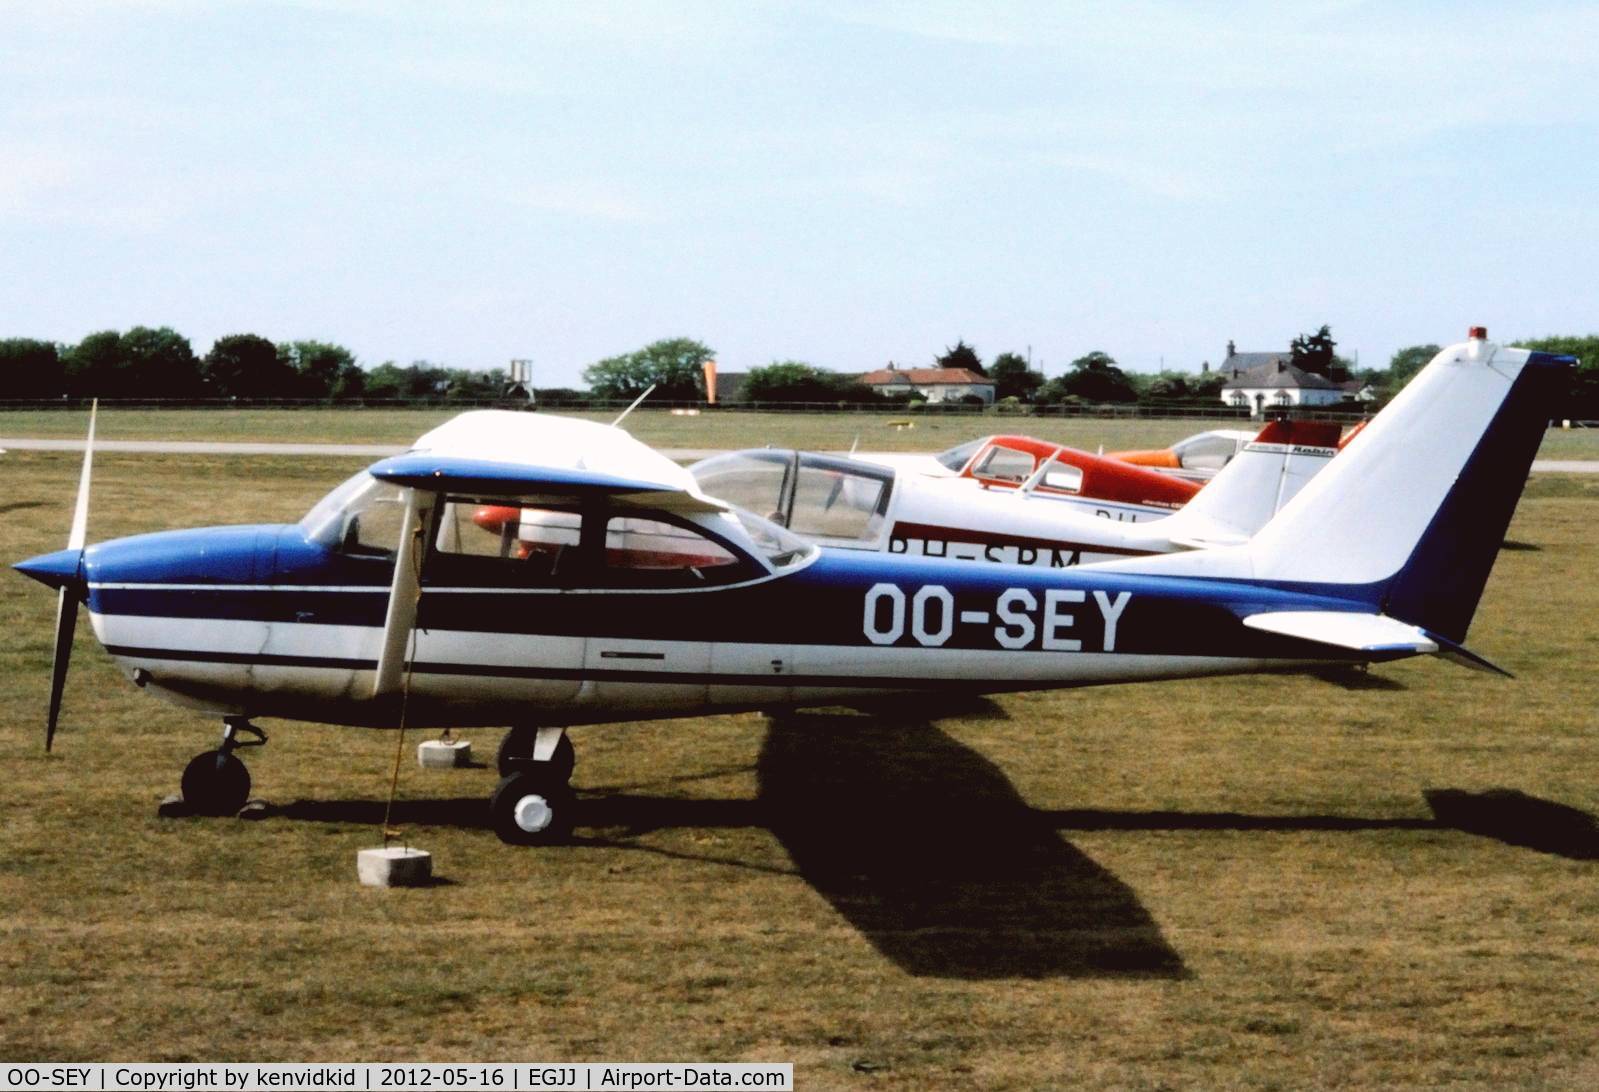 OO-SEY, 1965 Reims F172M Skyhawk Skyhawk C/N 0214, At Jersey airport early 1970's.
Scanned from slide.